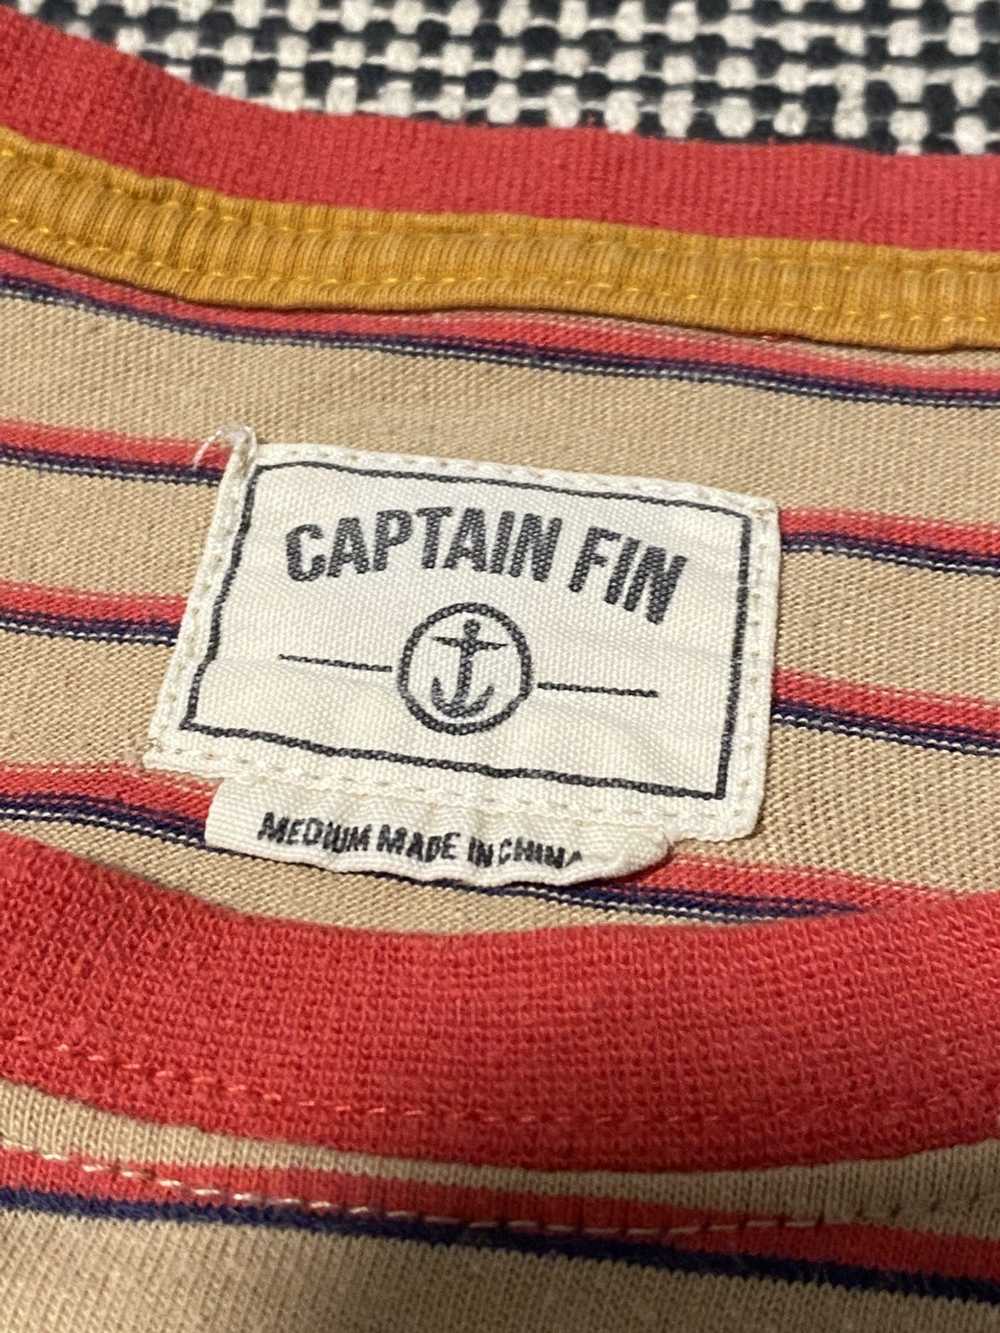 Captain Fin& Co. Tan striped shirt - image 2